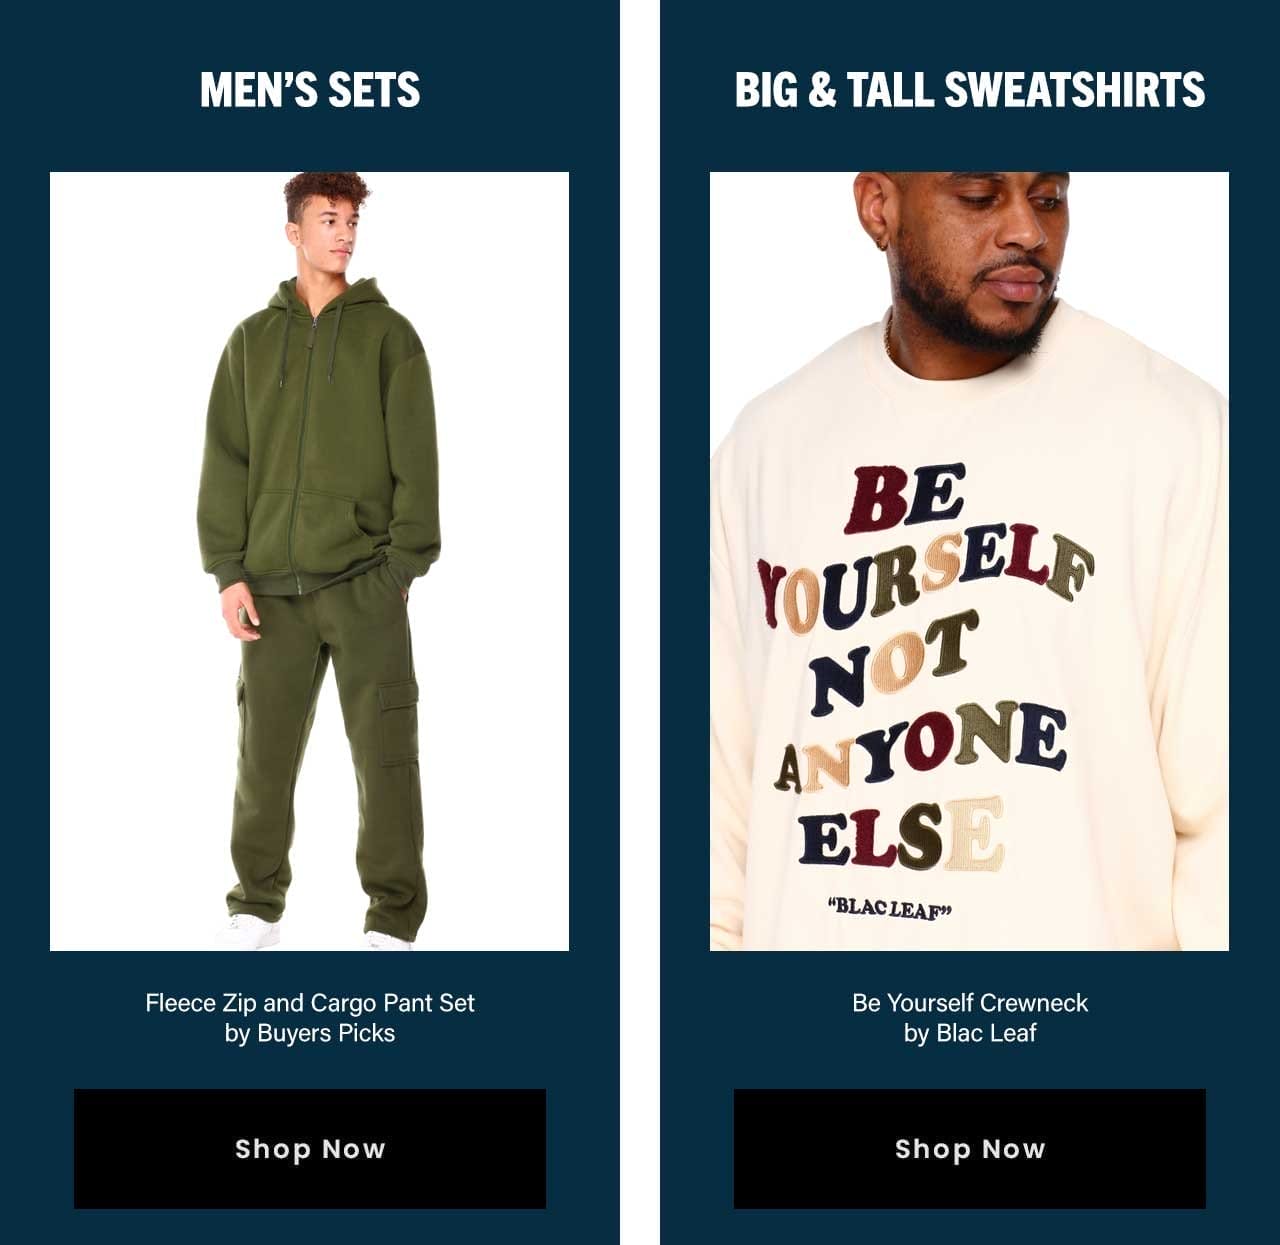 Shop Men's New Sweatshirts and Sets